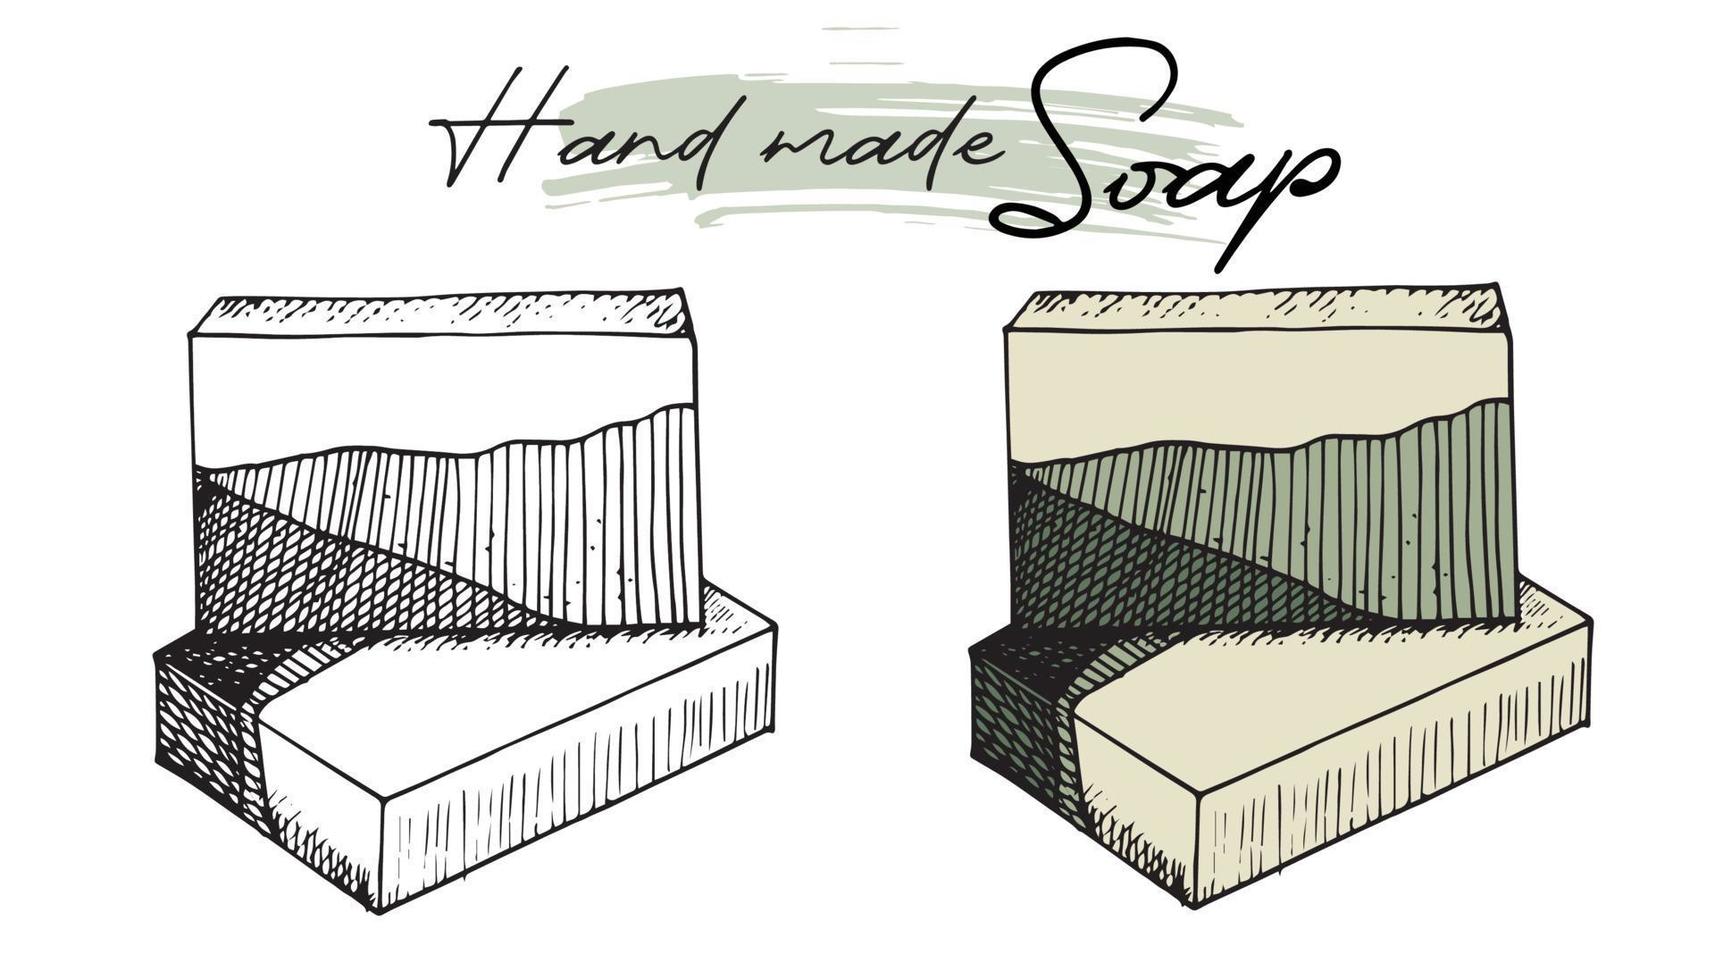 Craft soap bars. Hand made soap. Home made soap bars. vector